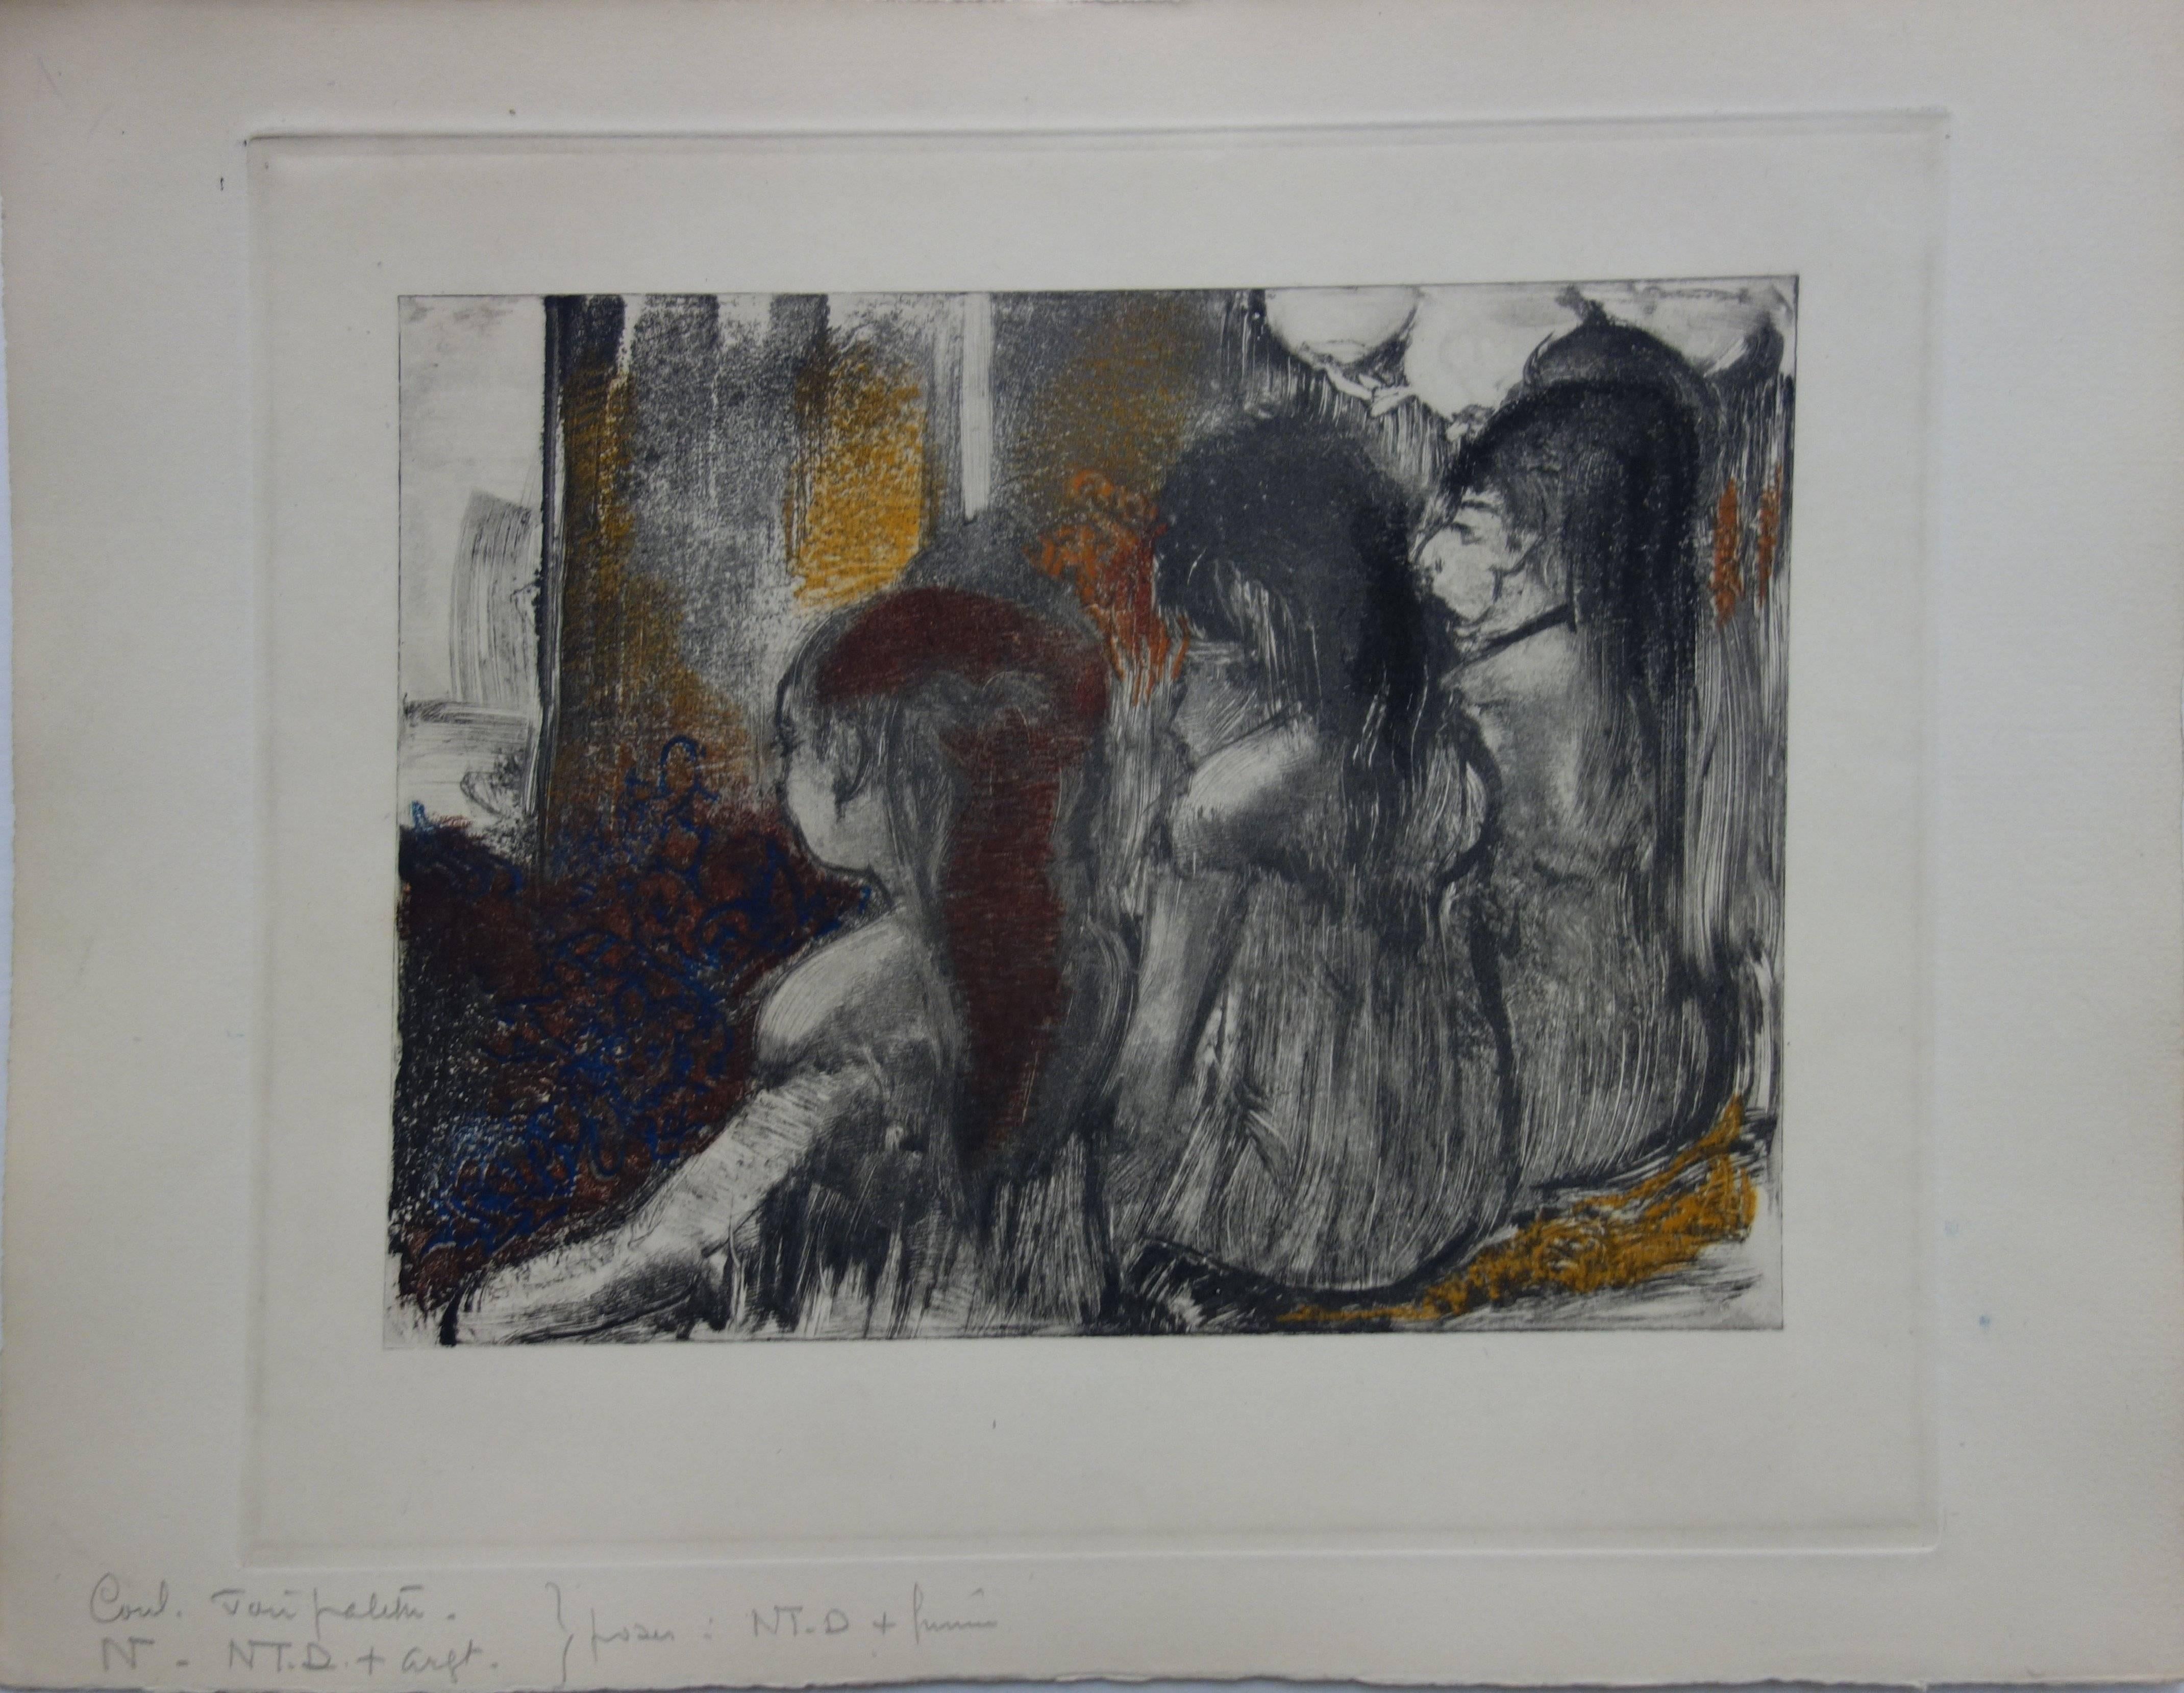 Whorehouse Scene : Prostitutes in Nightie - Original etching - Print by (after) Edgar Degas